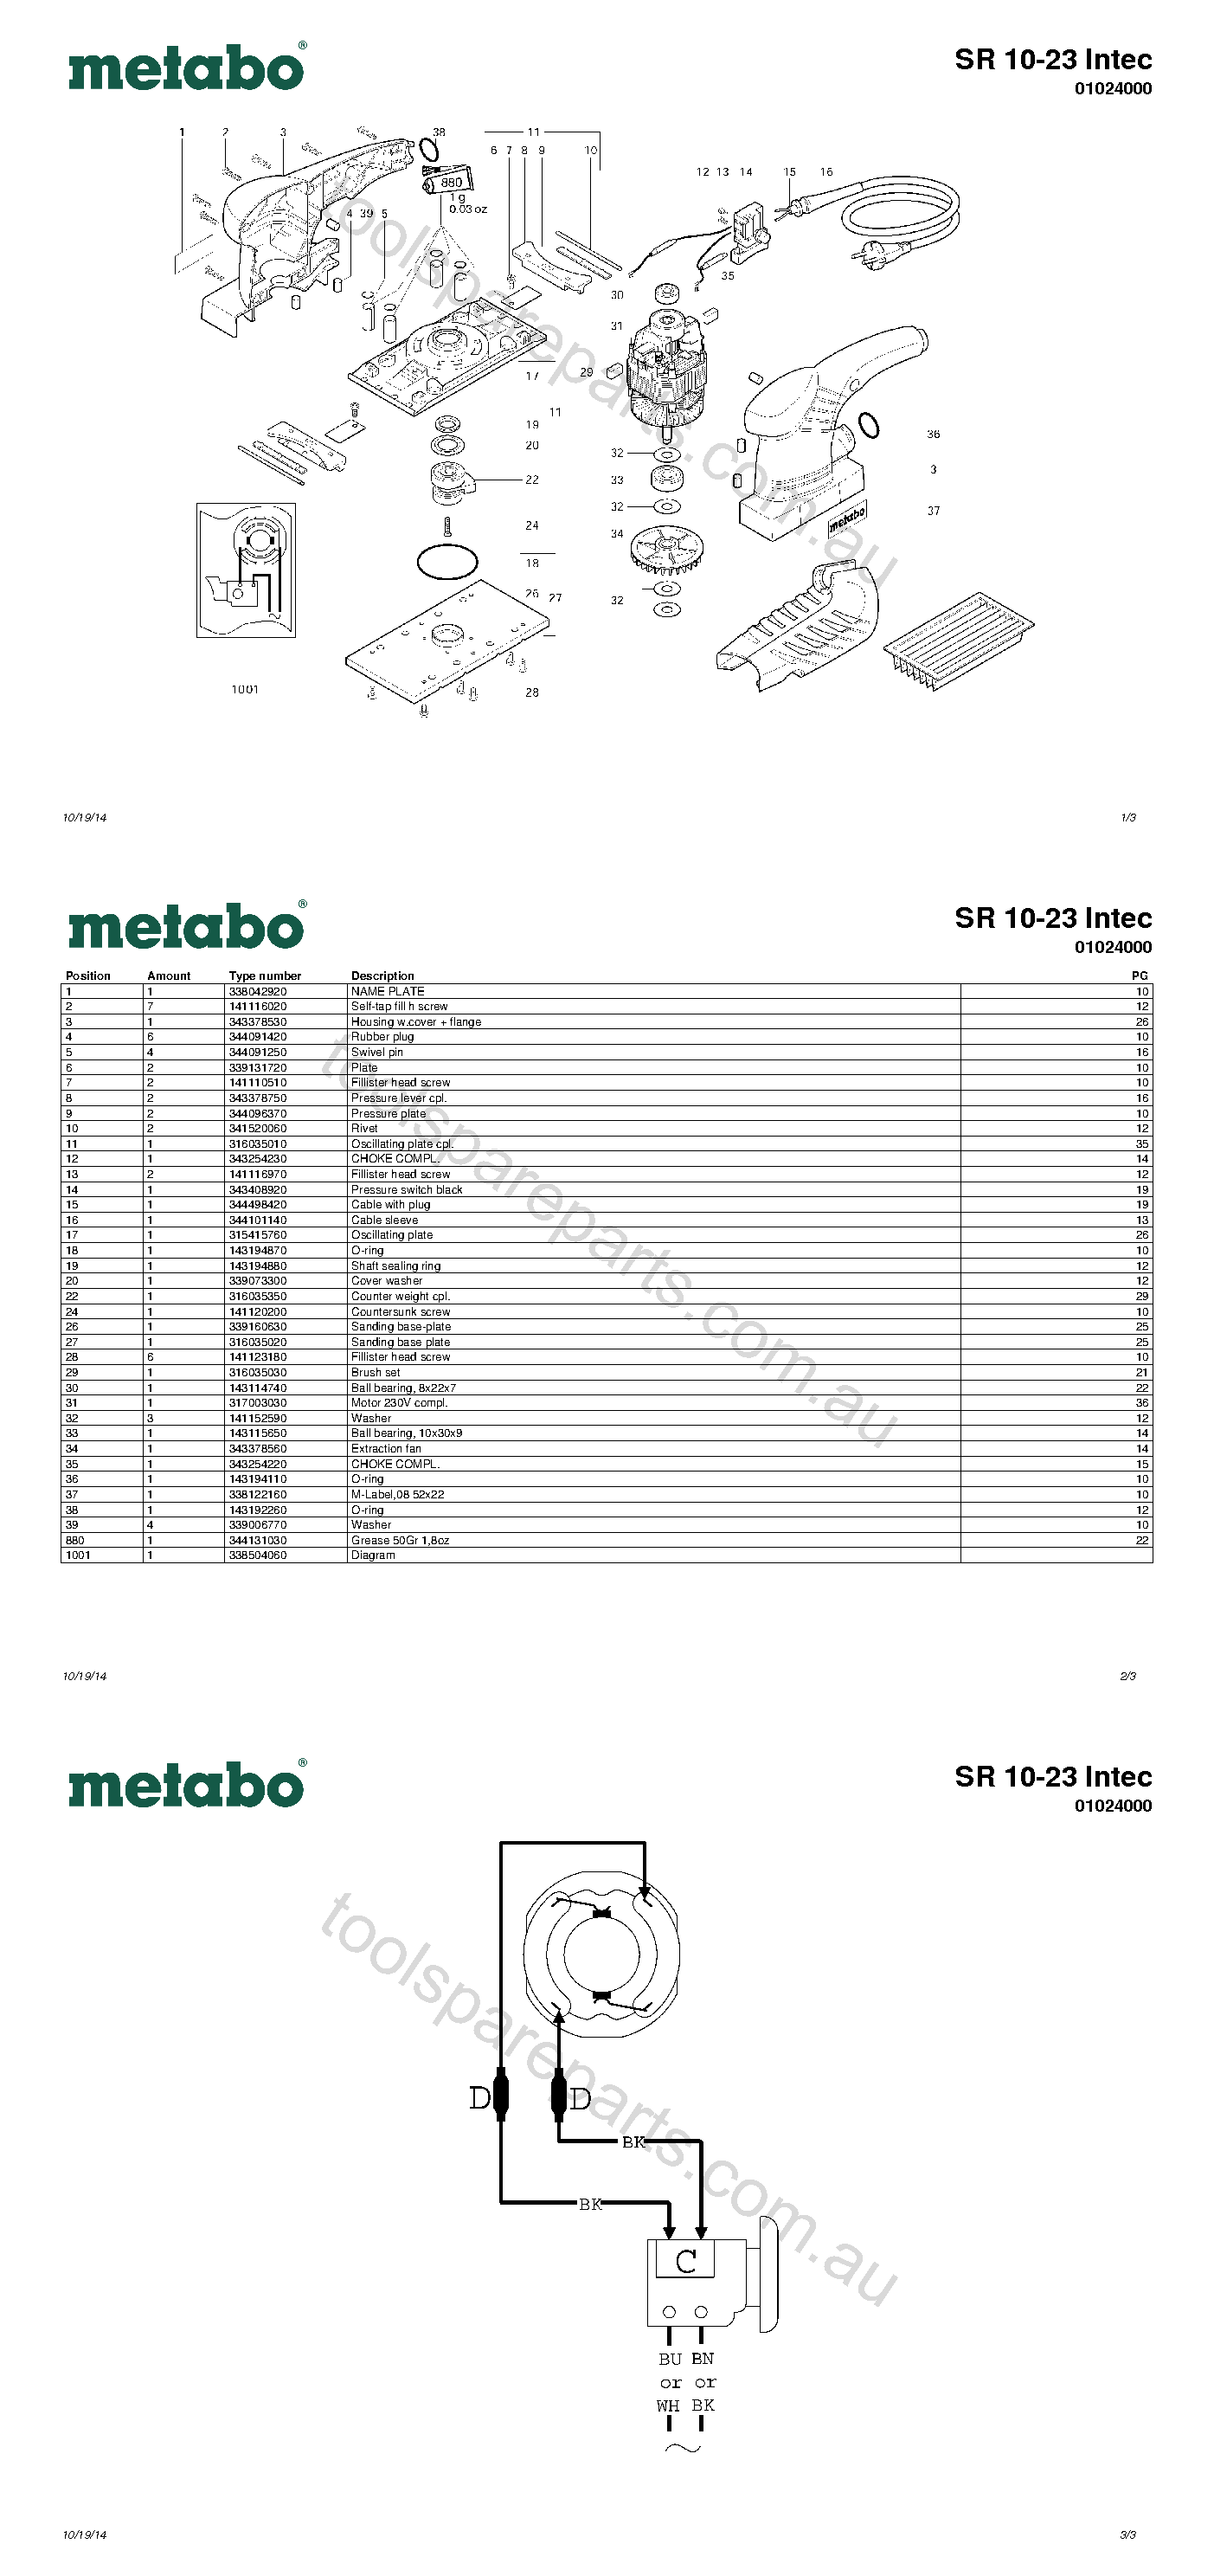 Metabo SR 10-23 Intec 01024000  Diagram 1